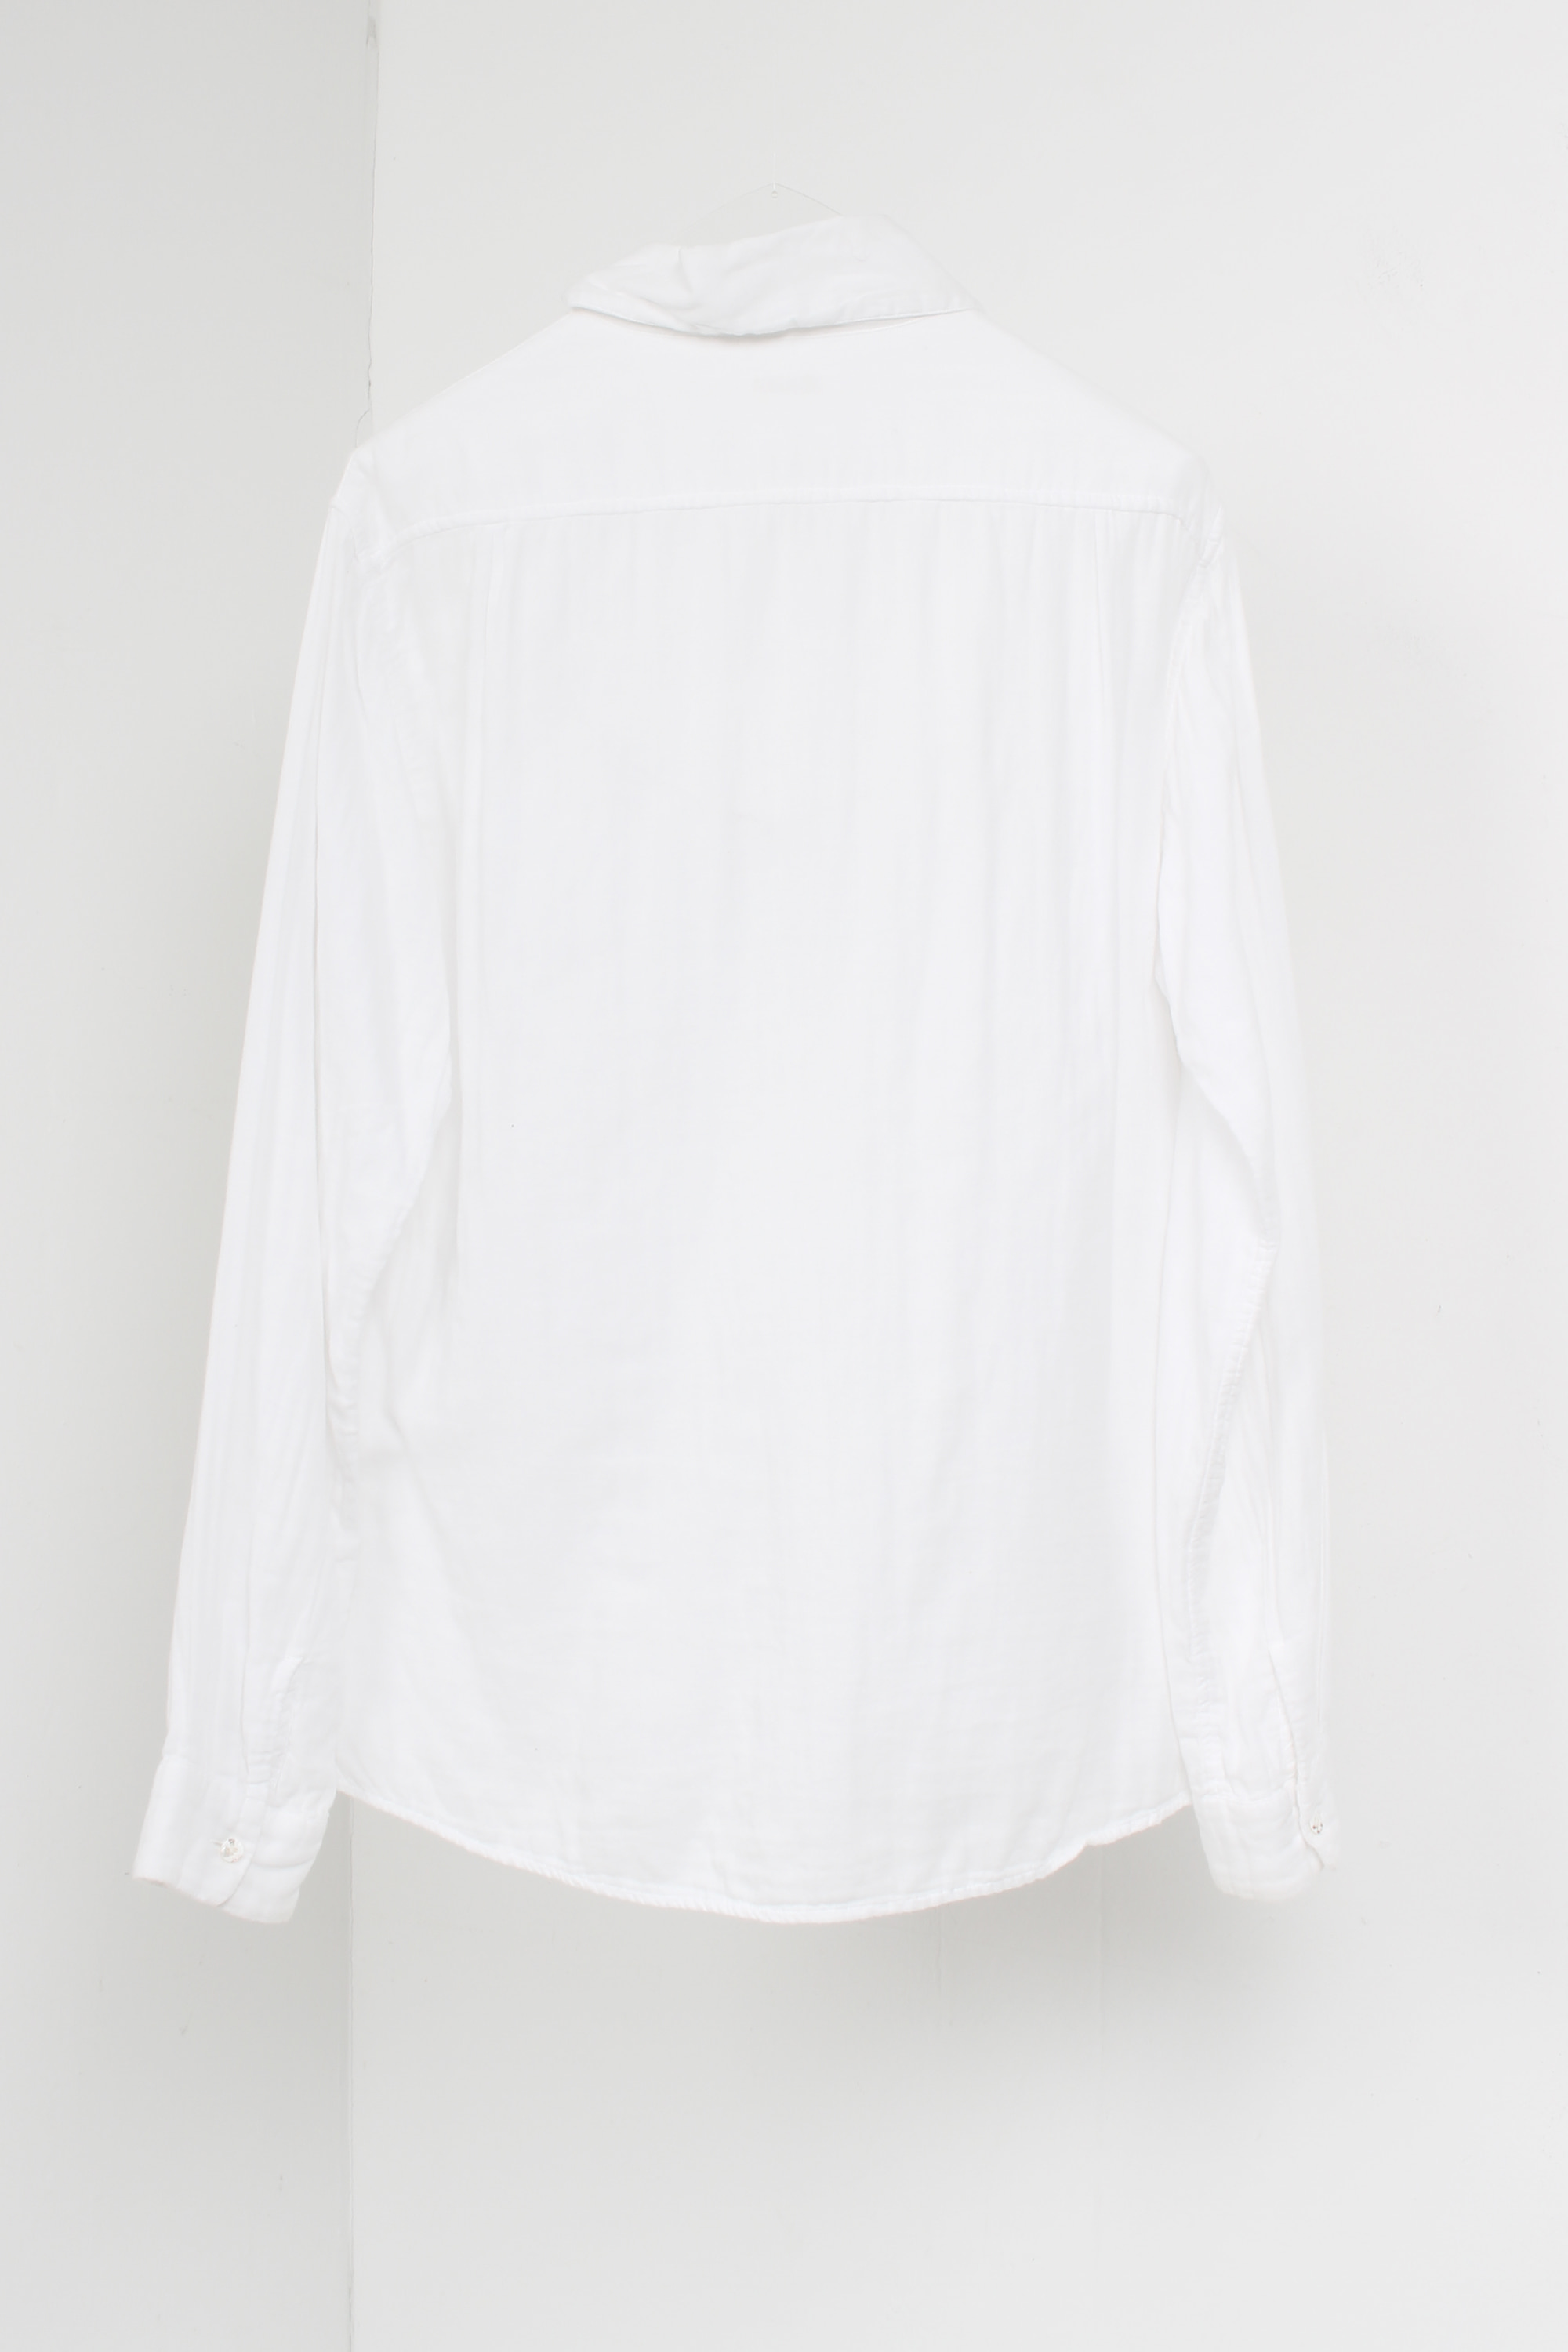 Kapital Cotton Shirts(3)